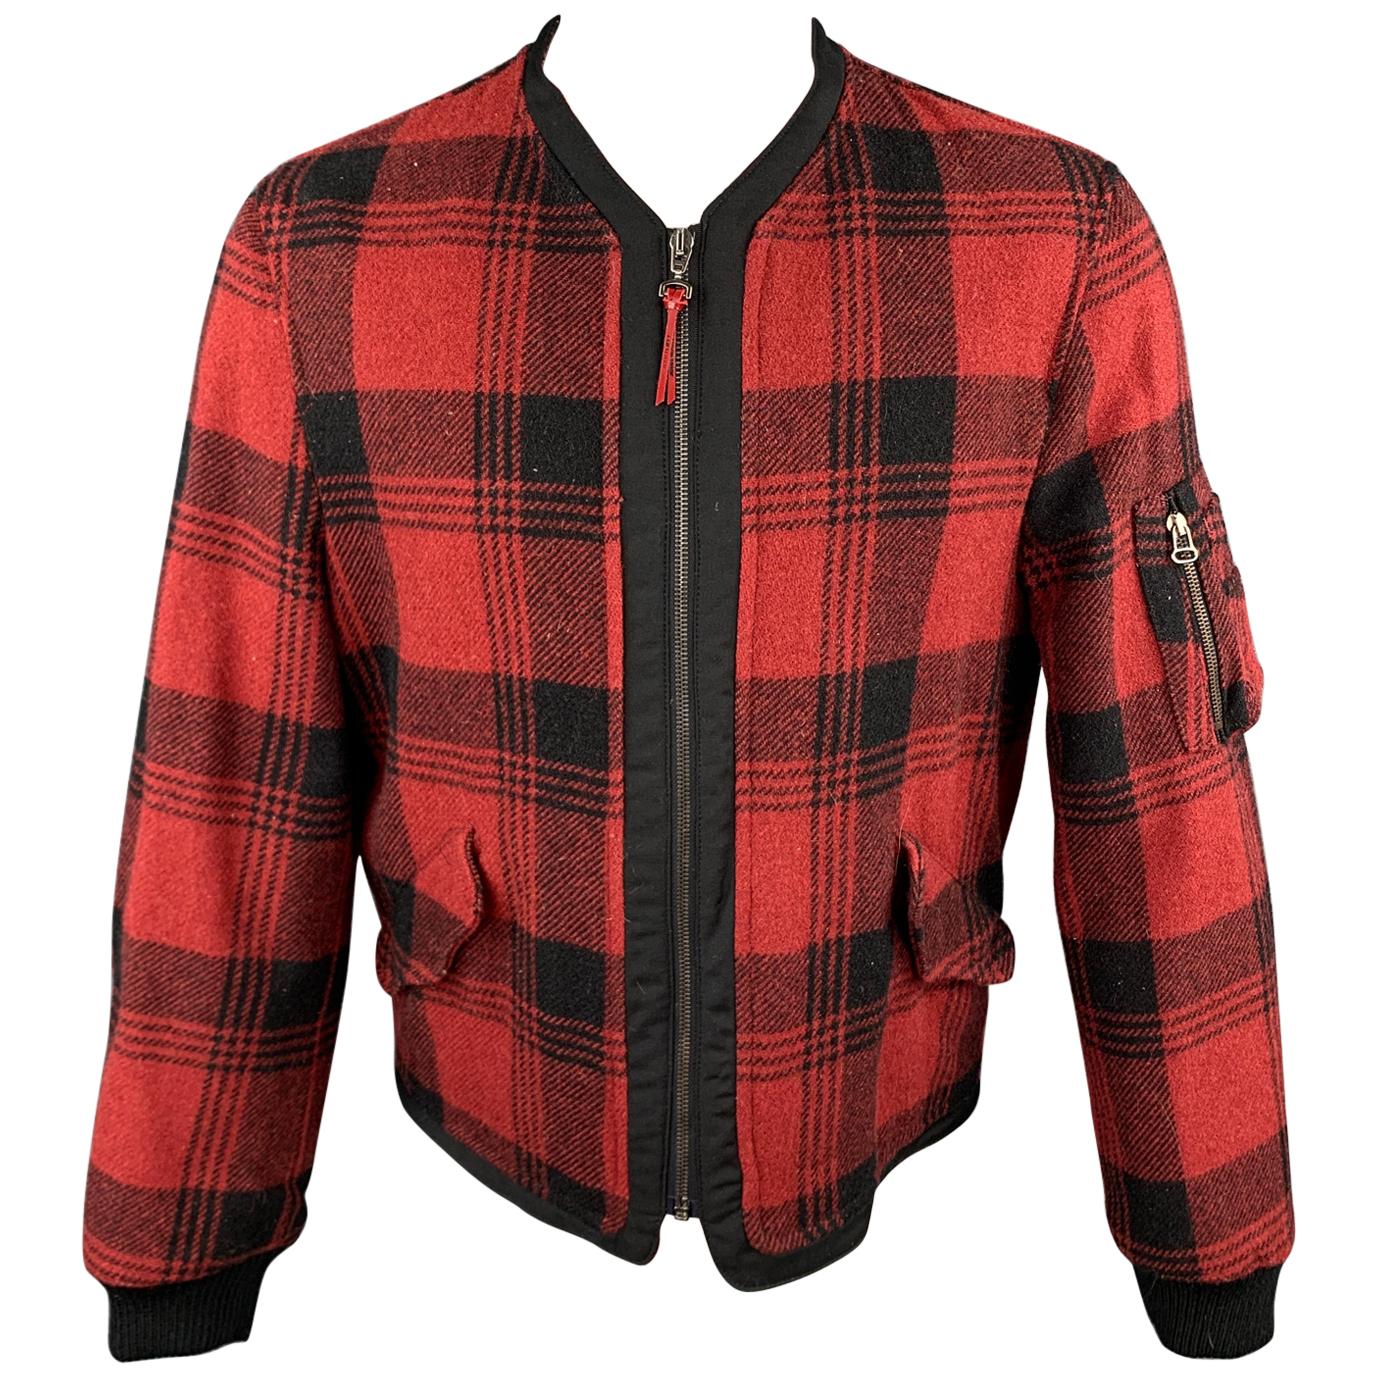 JOHN BARTLETT Uniform Size 40 Red & Black Plaid Wool Blend Zip Up Jacket